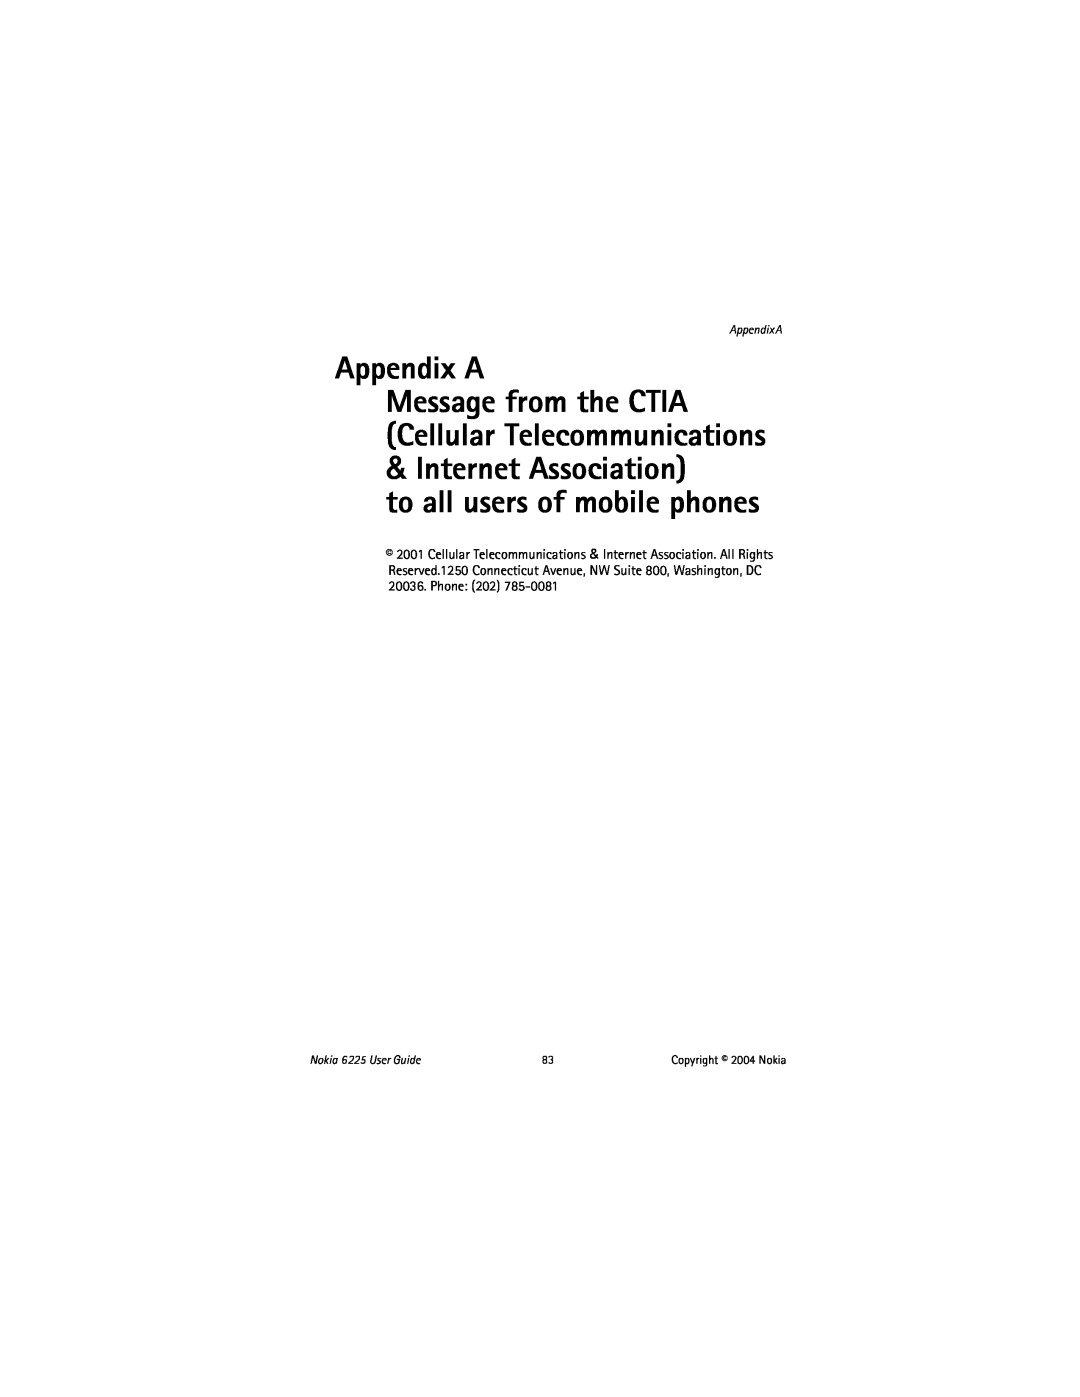 Nokia manual Appendix A Message from the CTIA Cellular Telecommunications, Nokia 6225 User Guide, Copyright 2004 Nokia 